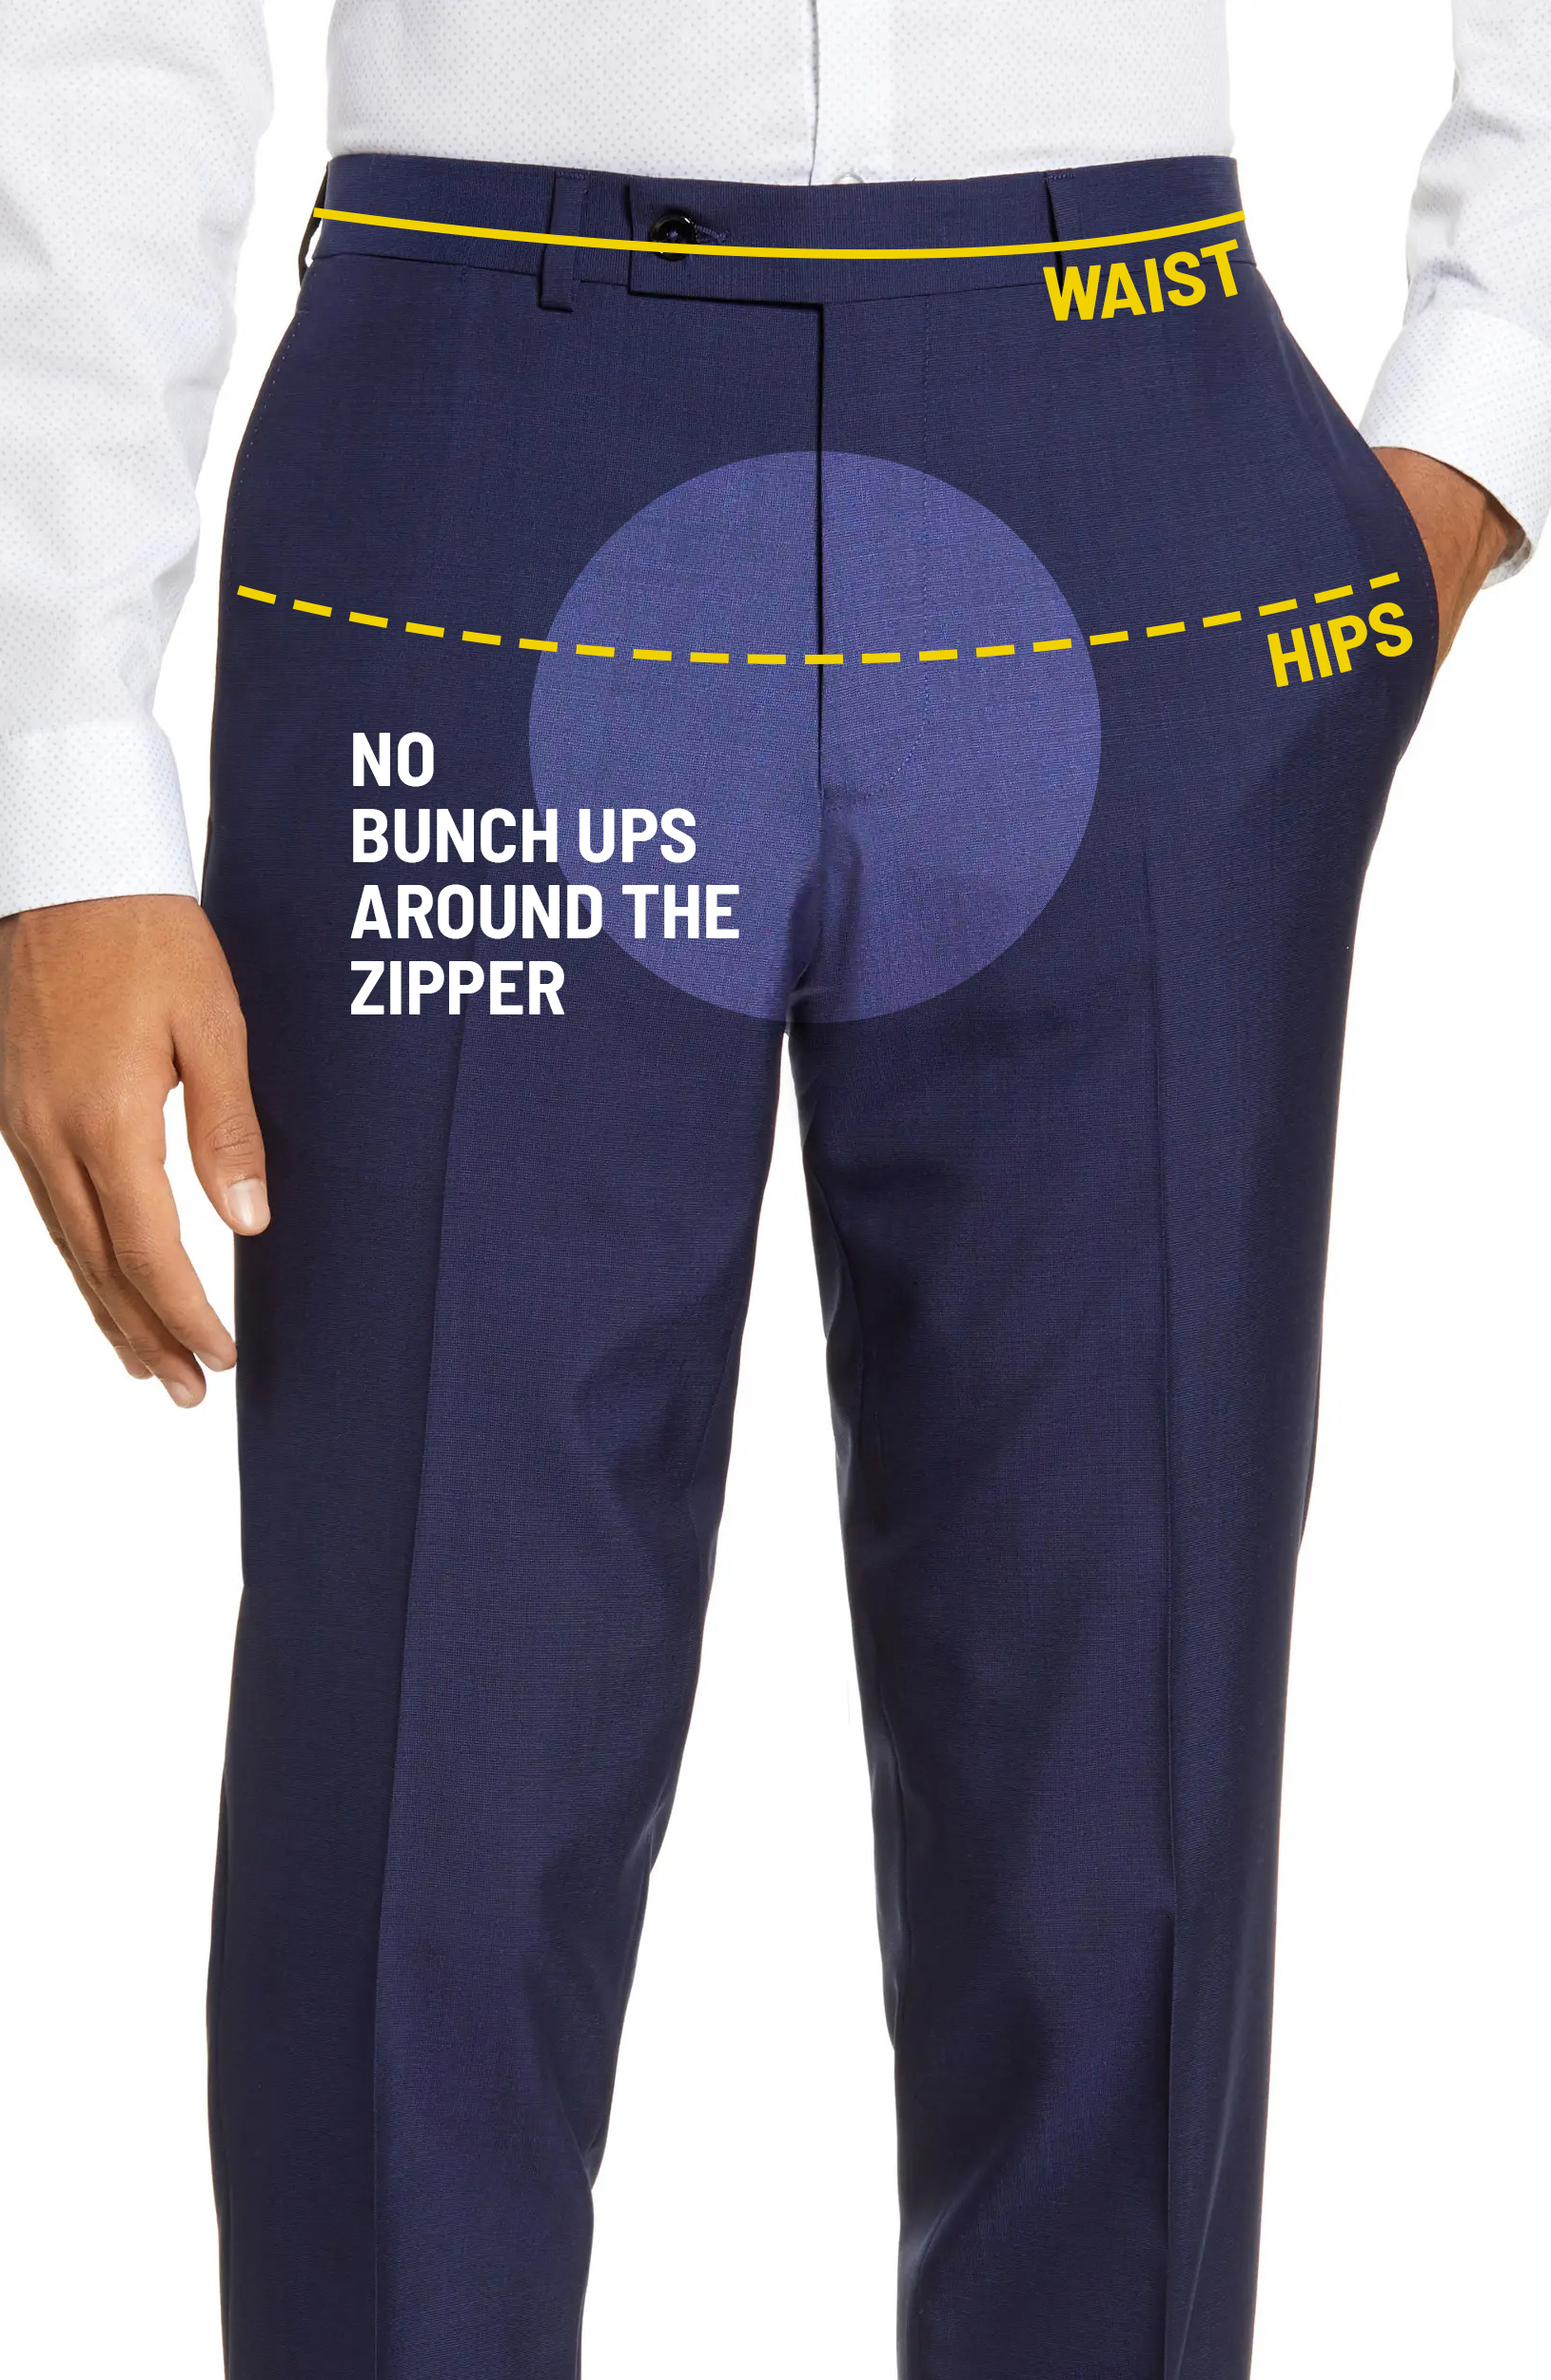 Proper pants' waist: area around the zipper does not bunch up